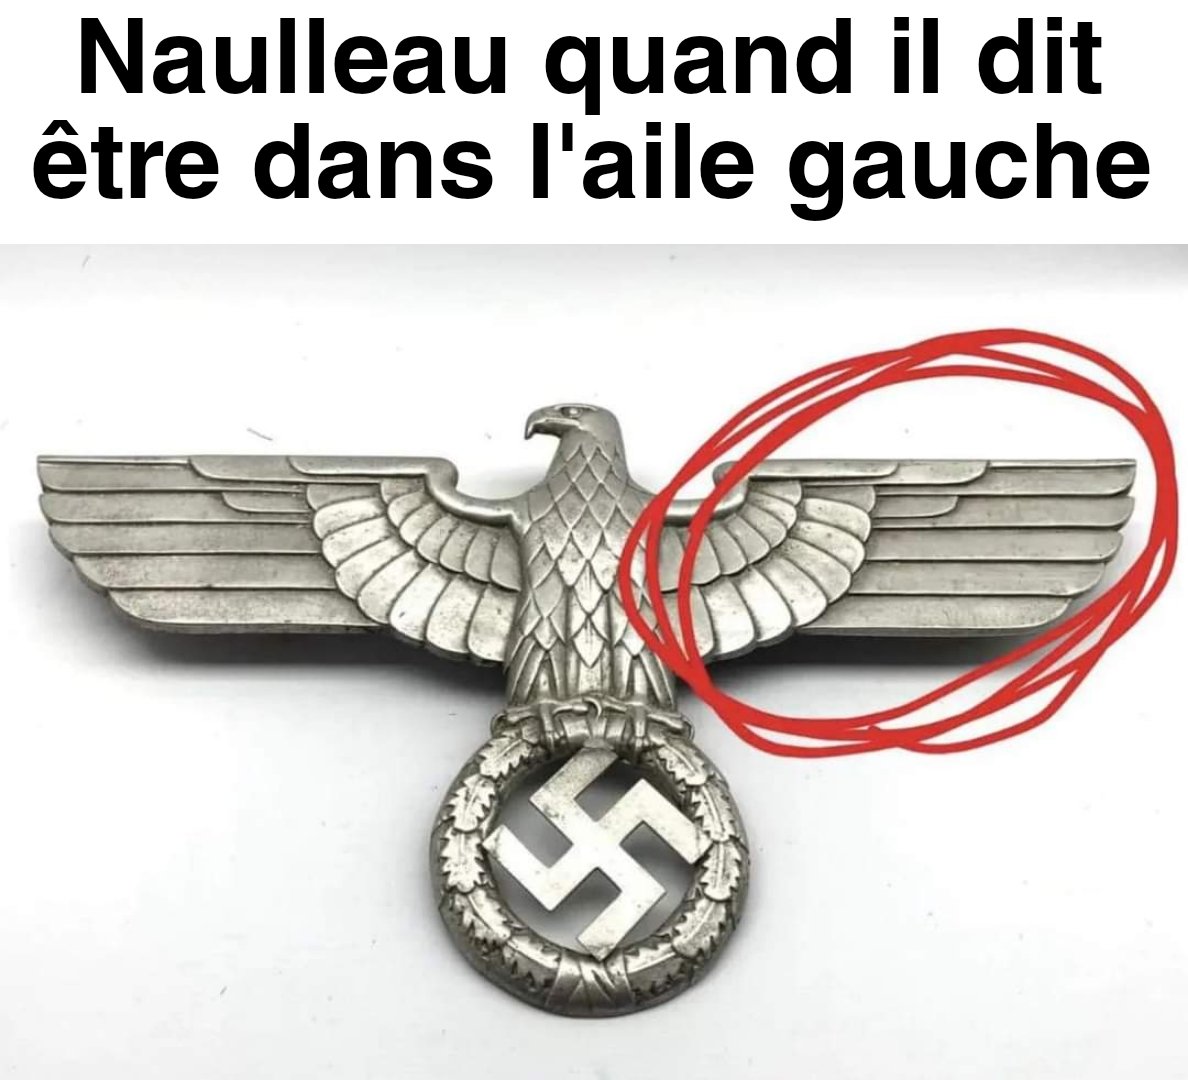 Memes de Gauche ☭ (@meme_gauche) on Twitter photo 2024-04-12 08:42:58